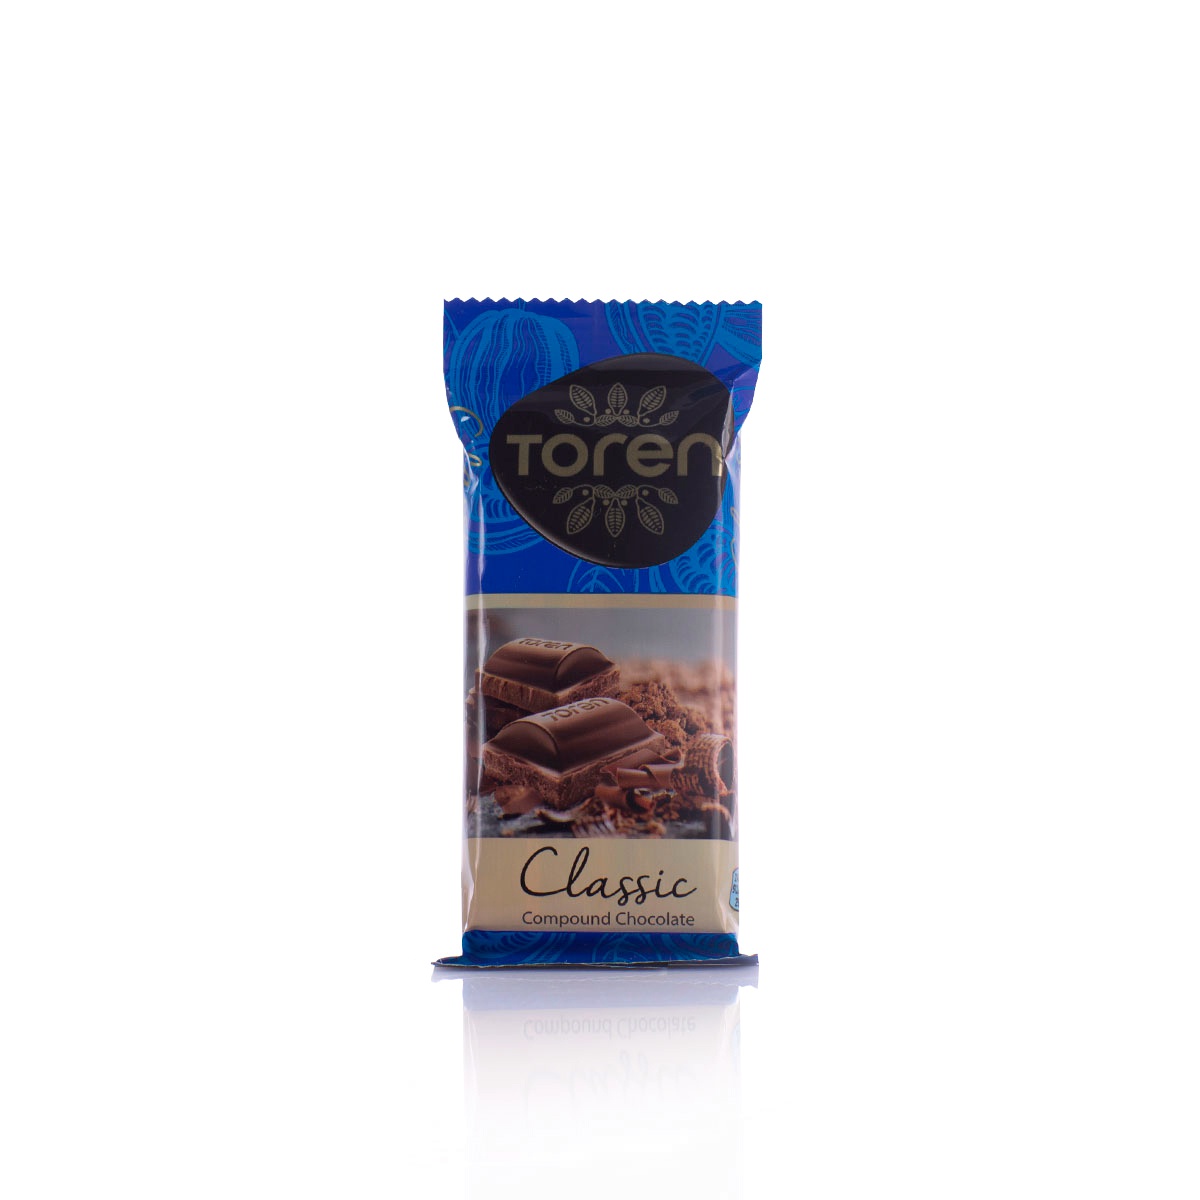 Toren Classic Compound Chocolate 100G - TORREN - Confectionary - in Sri Lanka